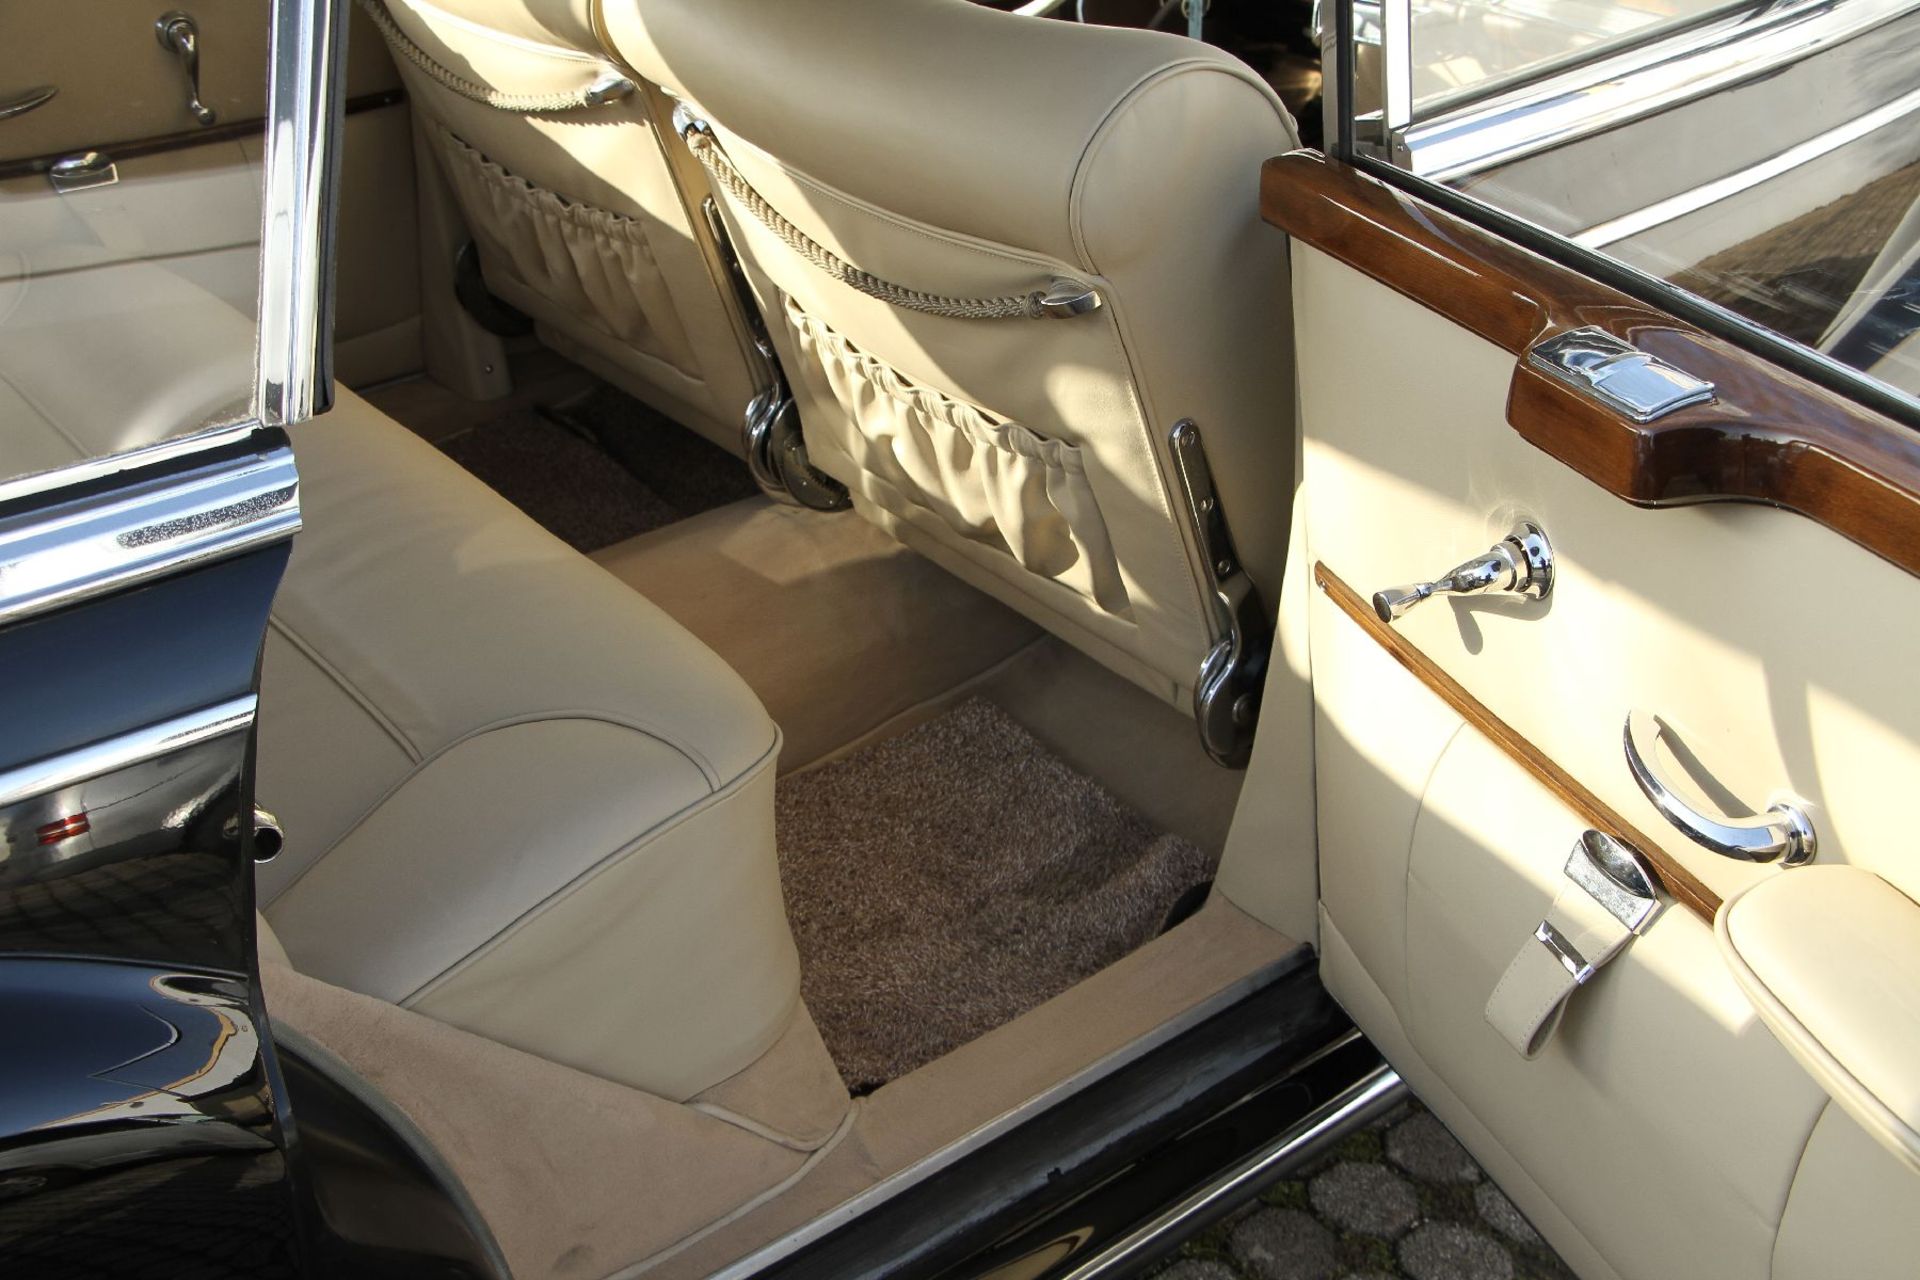 Mercedes-Benz 300d Adenauer, Fahrgestellnummer: 8500228, - Bild 9 aus 16